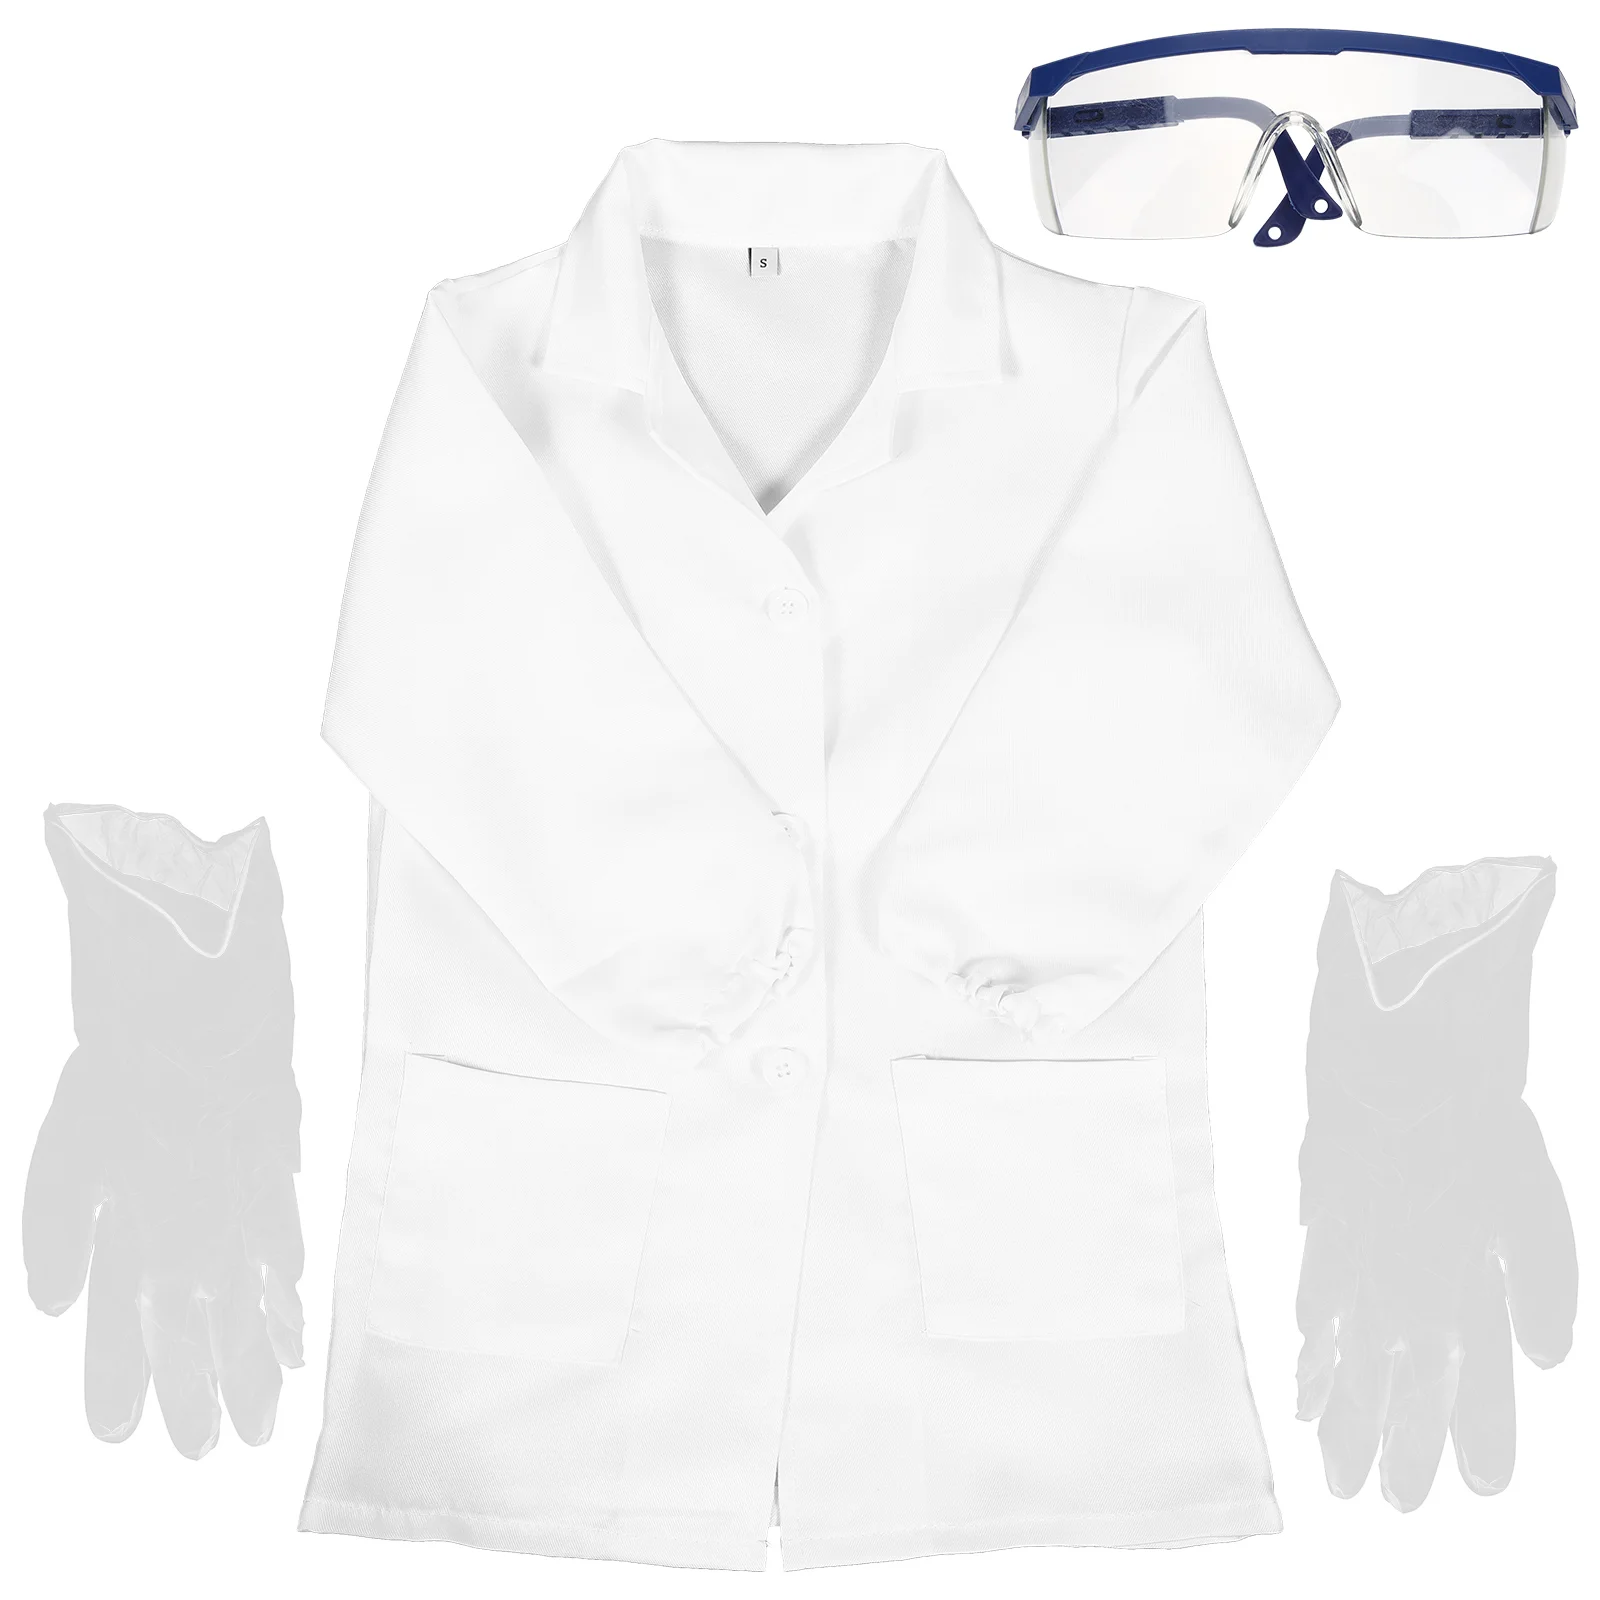 

1 Set Kids Doctor Scientist Coat Glasses Gloves Costume Accessories for Boys Girls